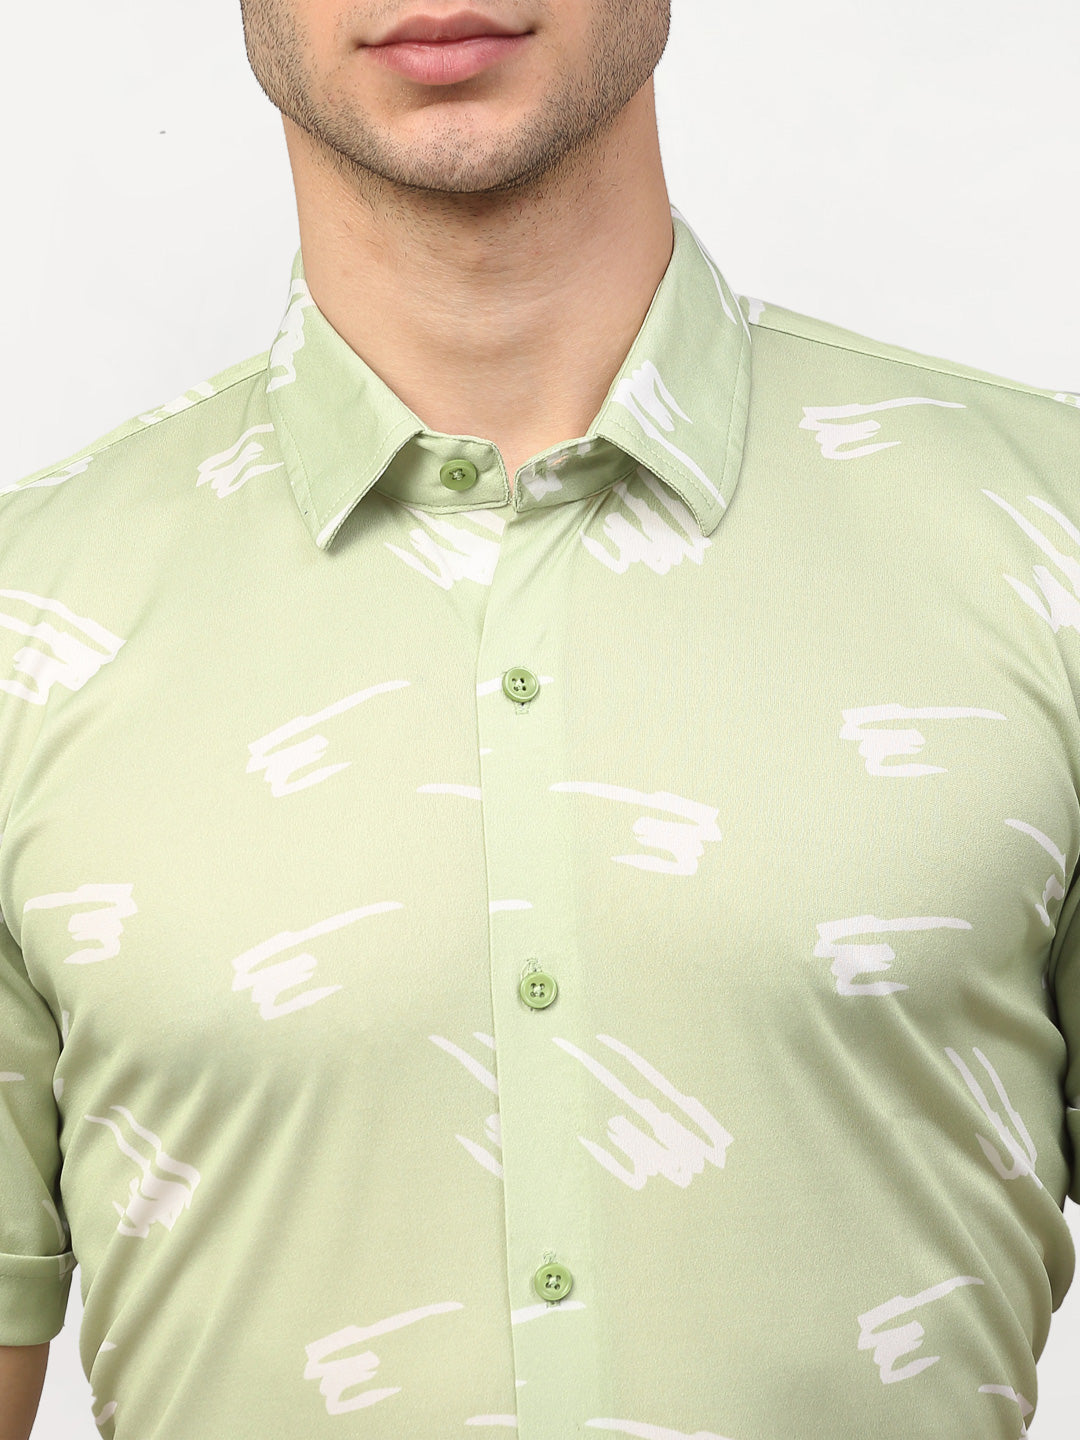 Men's Green Printed Lycra Half Sleevess Formal Shirts ( SF 778Pista ) - Jainish